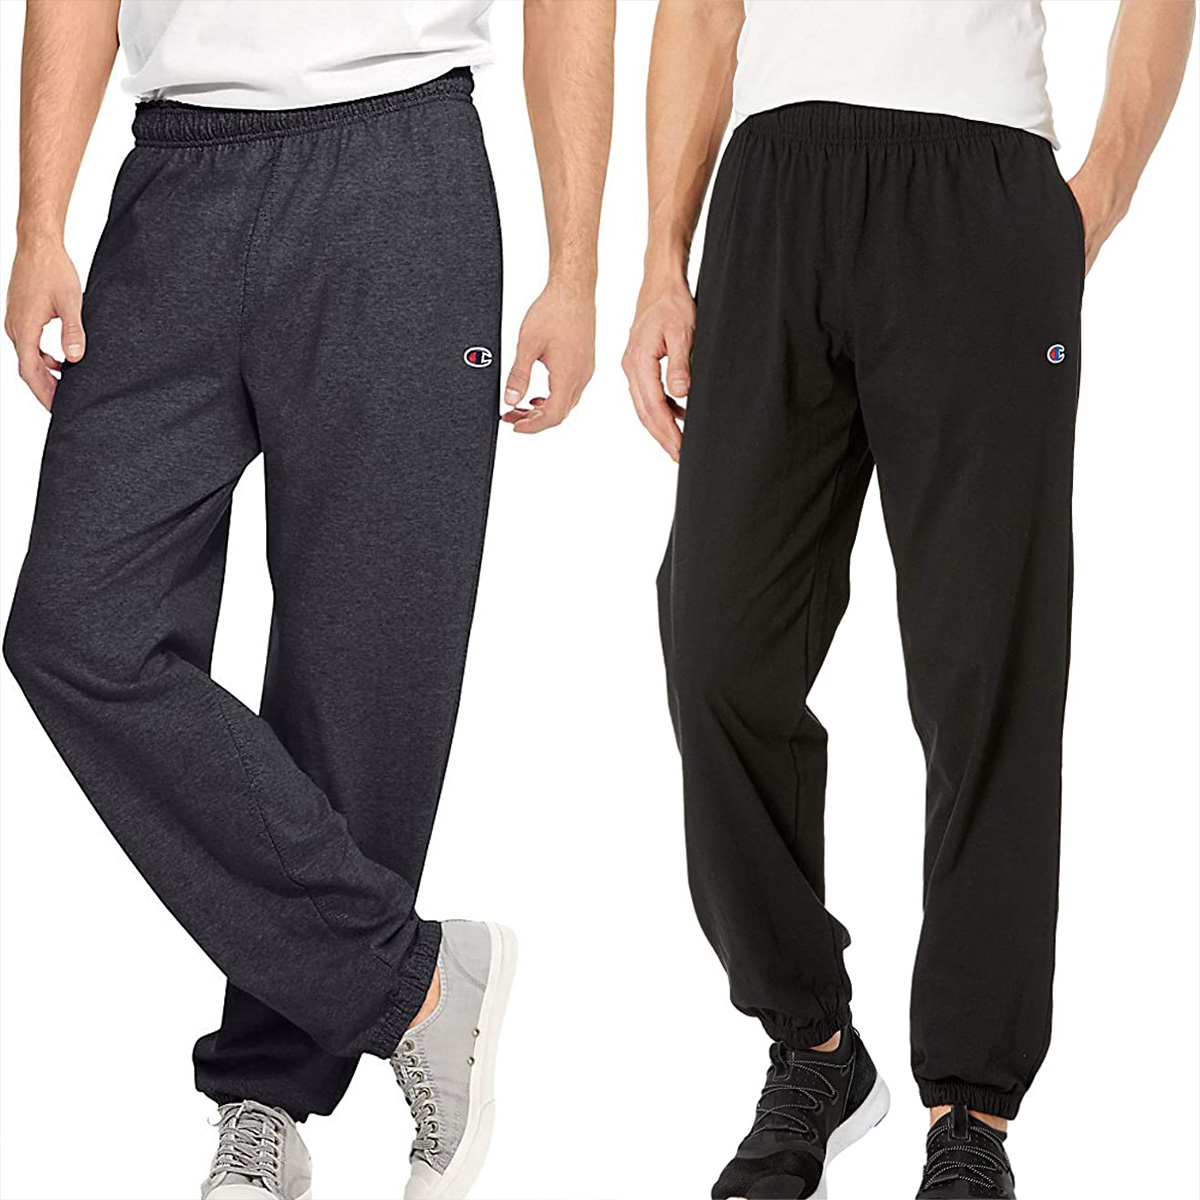 These $18 Men’s Sweatpants Have 29,000+ 5-Star Amazon Reviews